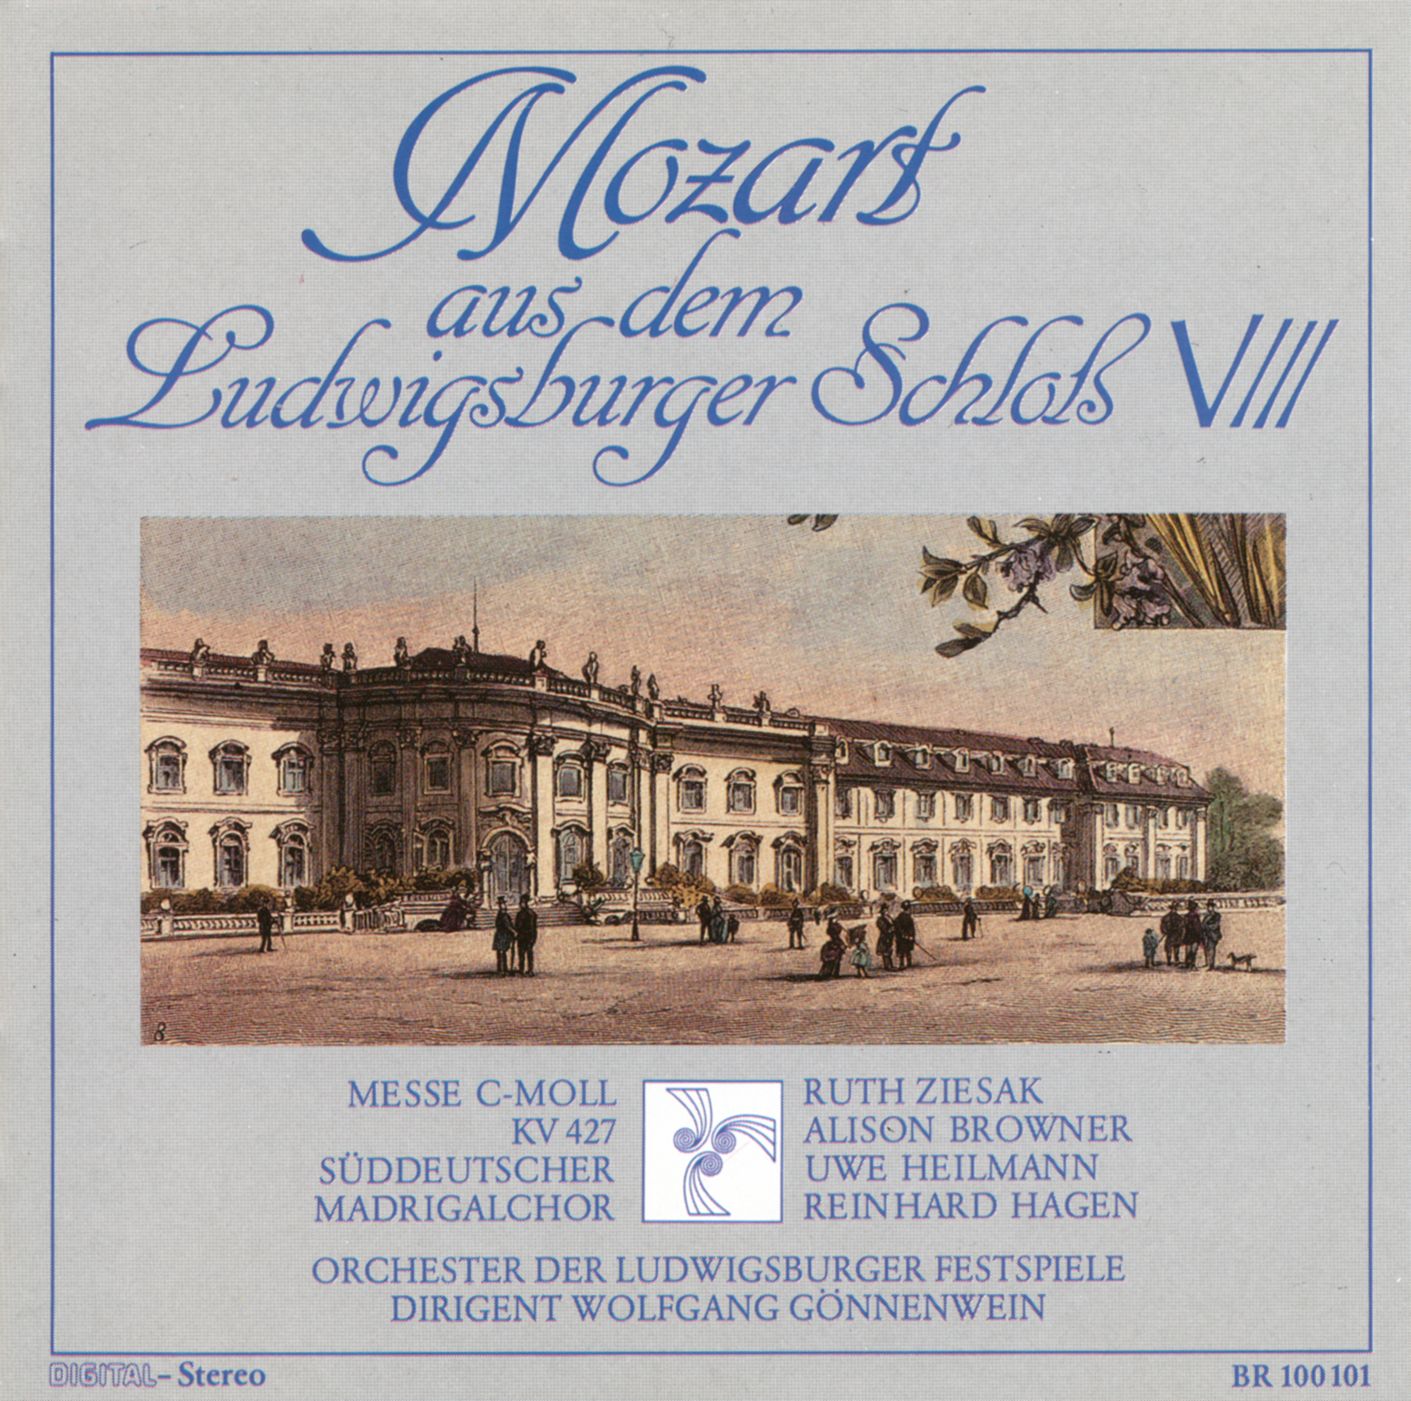 Mozart aus dem Ludwigsburger Schloß VIII